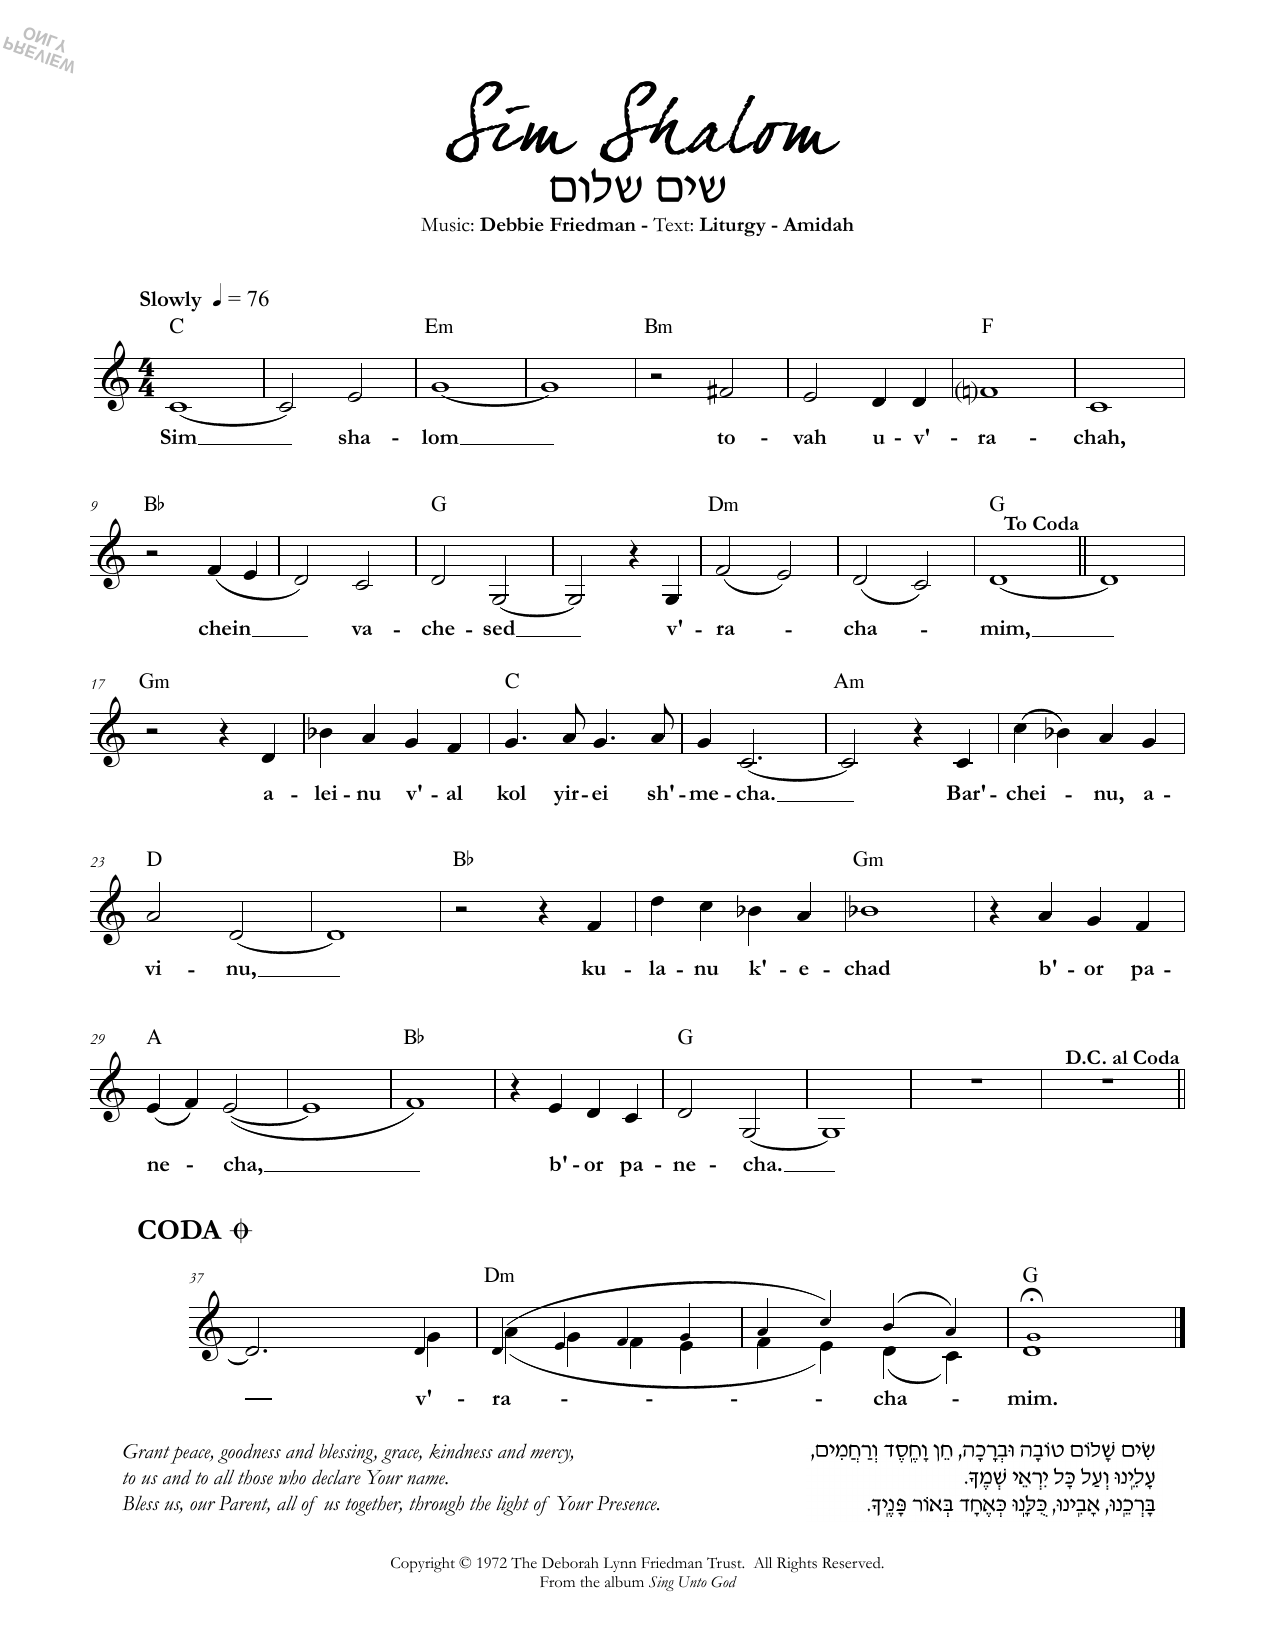 Debbie Friedman Sim Shalom Sheet Music Notes & Chords for Lead Sheet / Fake Book - Download or Print PDF